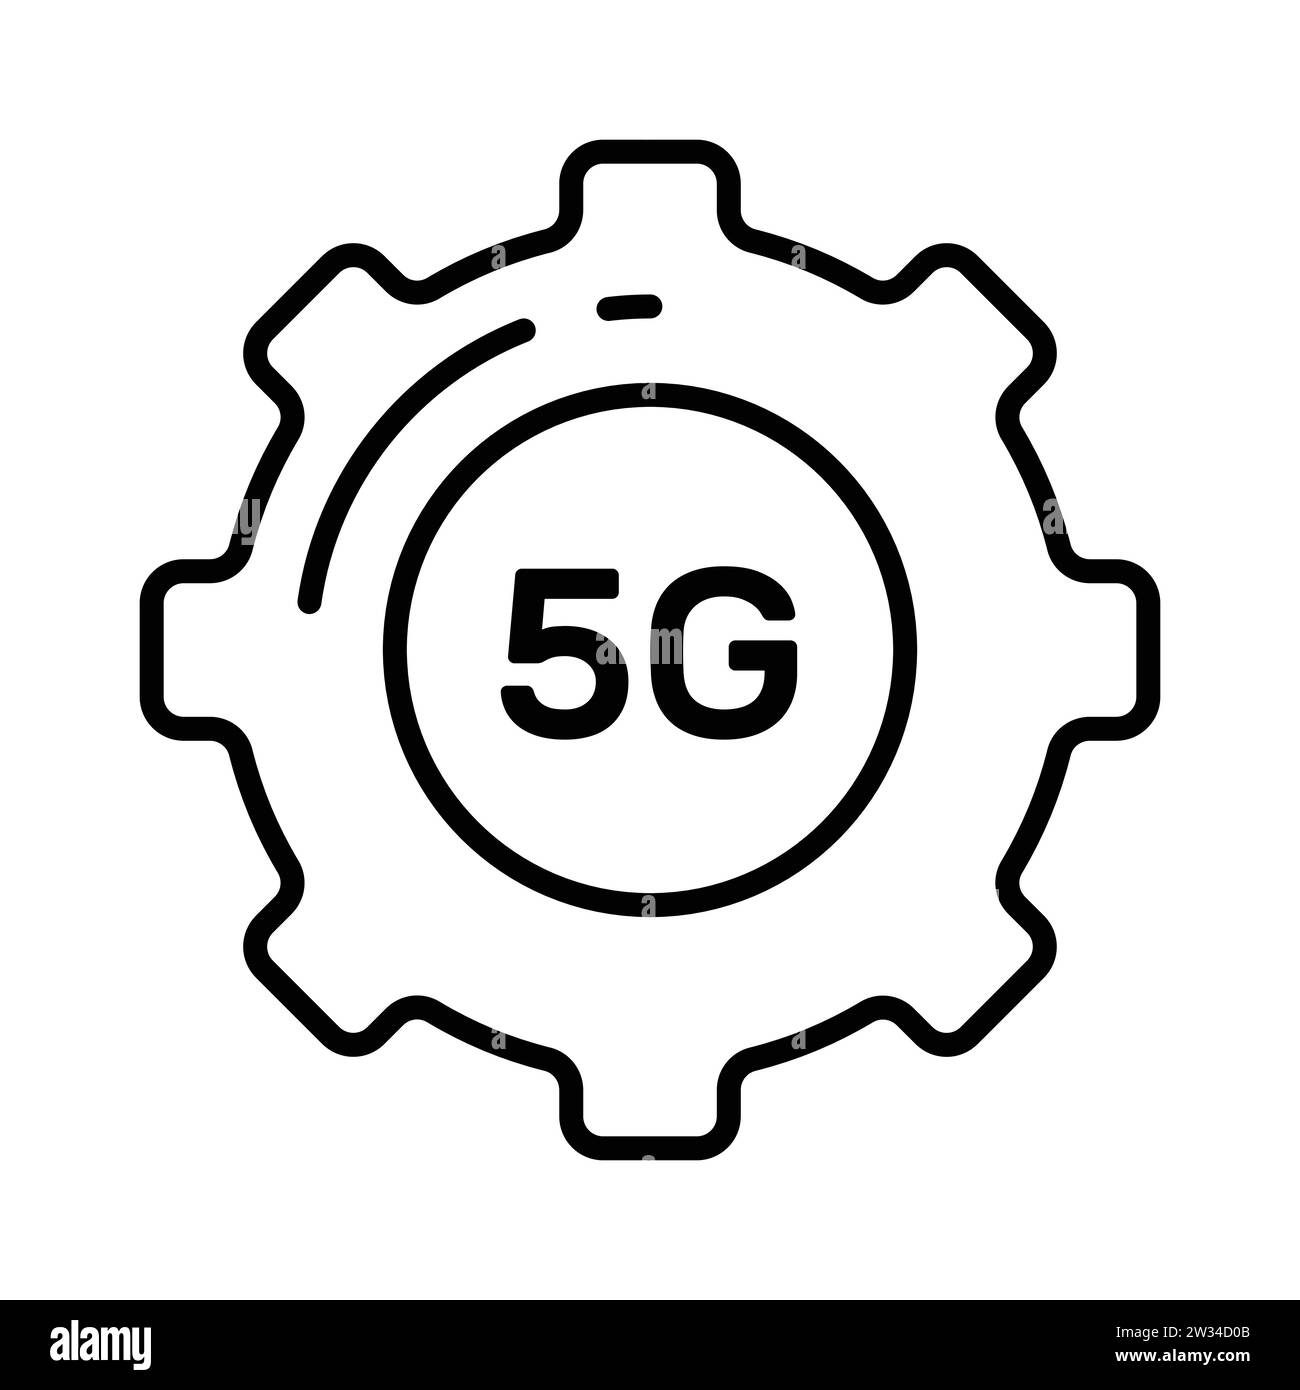 5G text inside cogwheel denoting concept icon of 5G network setting Stock Vector